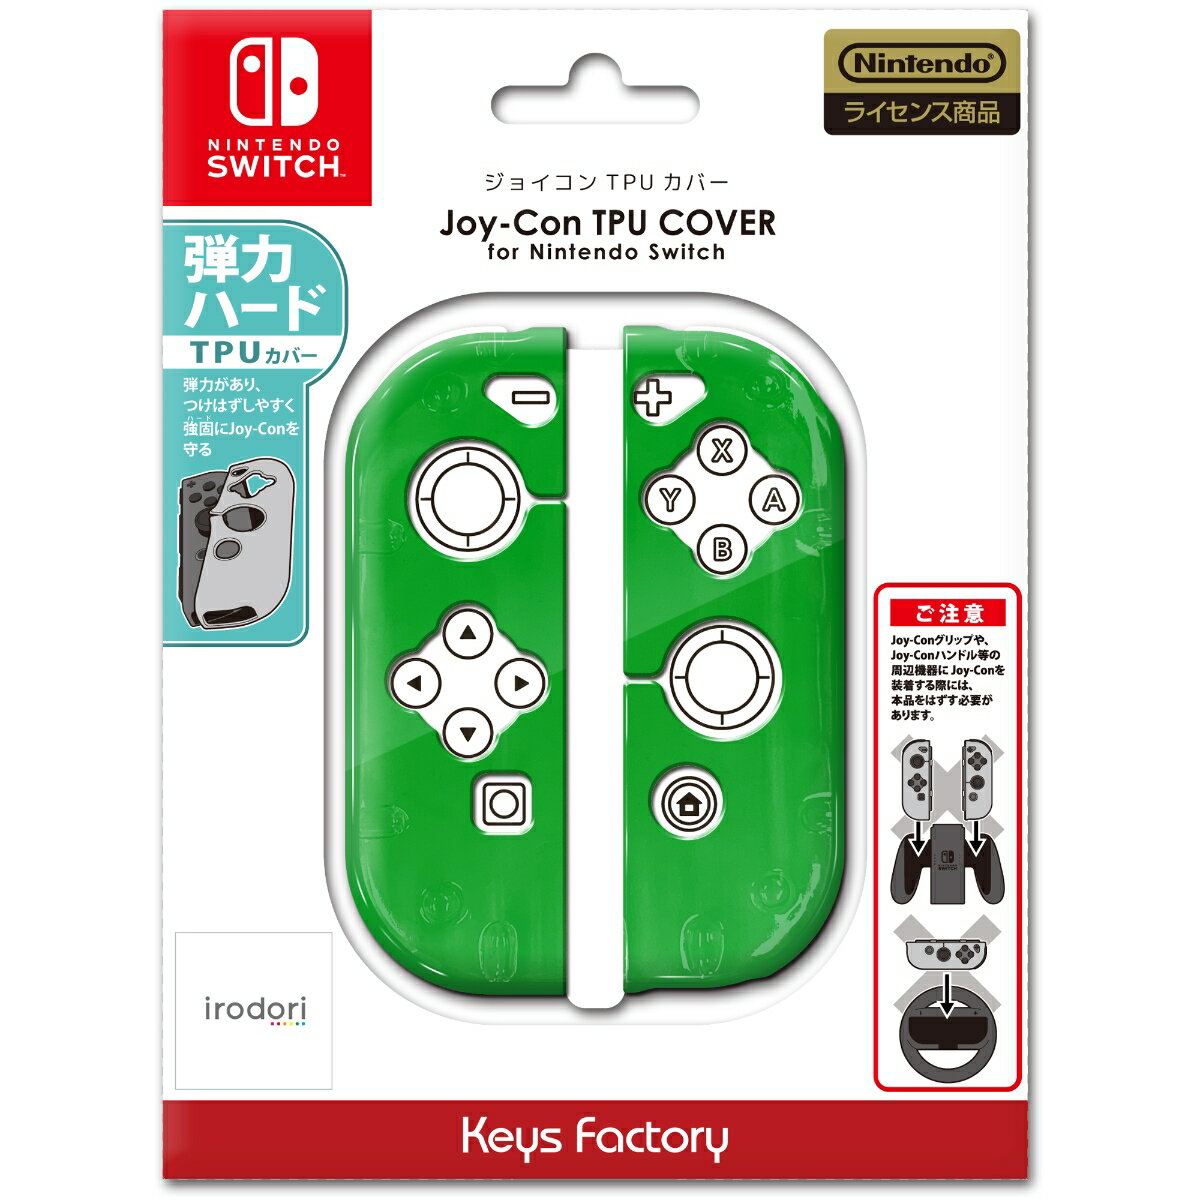 Nintendo Switch, 周辺機器 Joy-Con TPU COVER for Nintendo Switch 